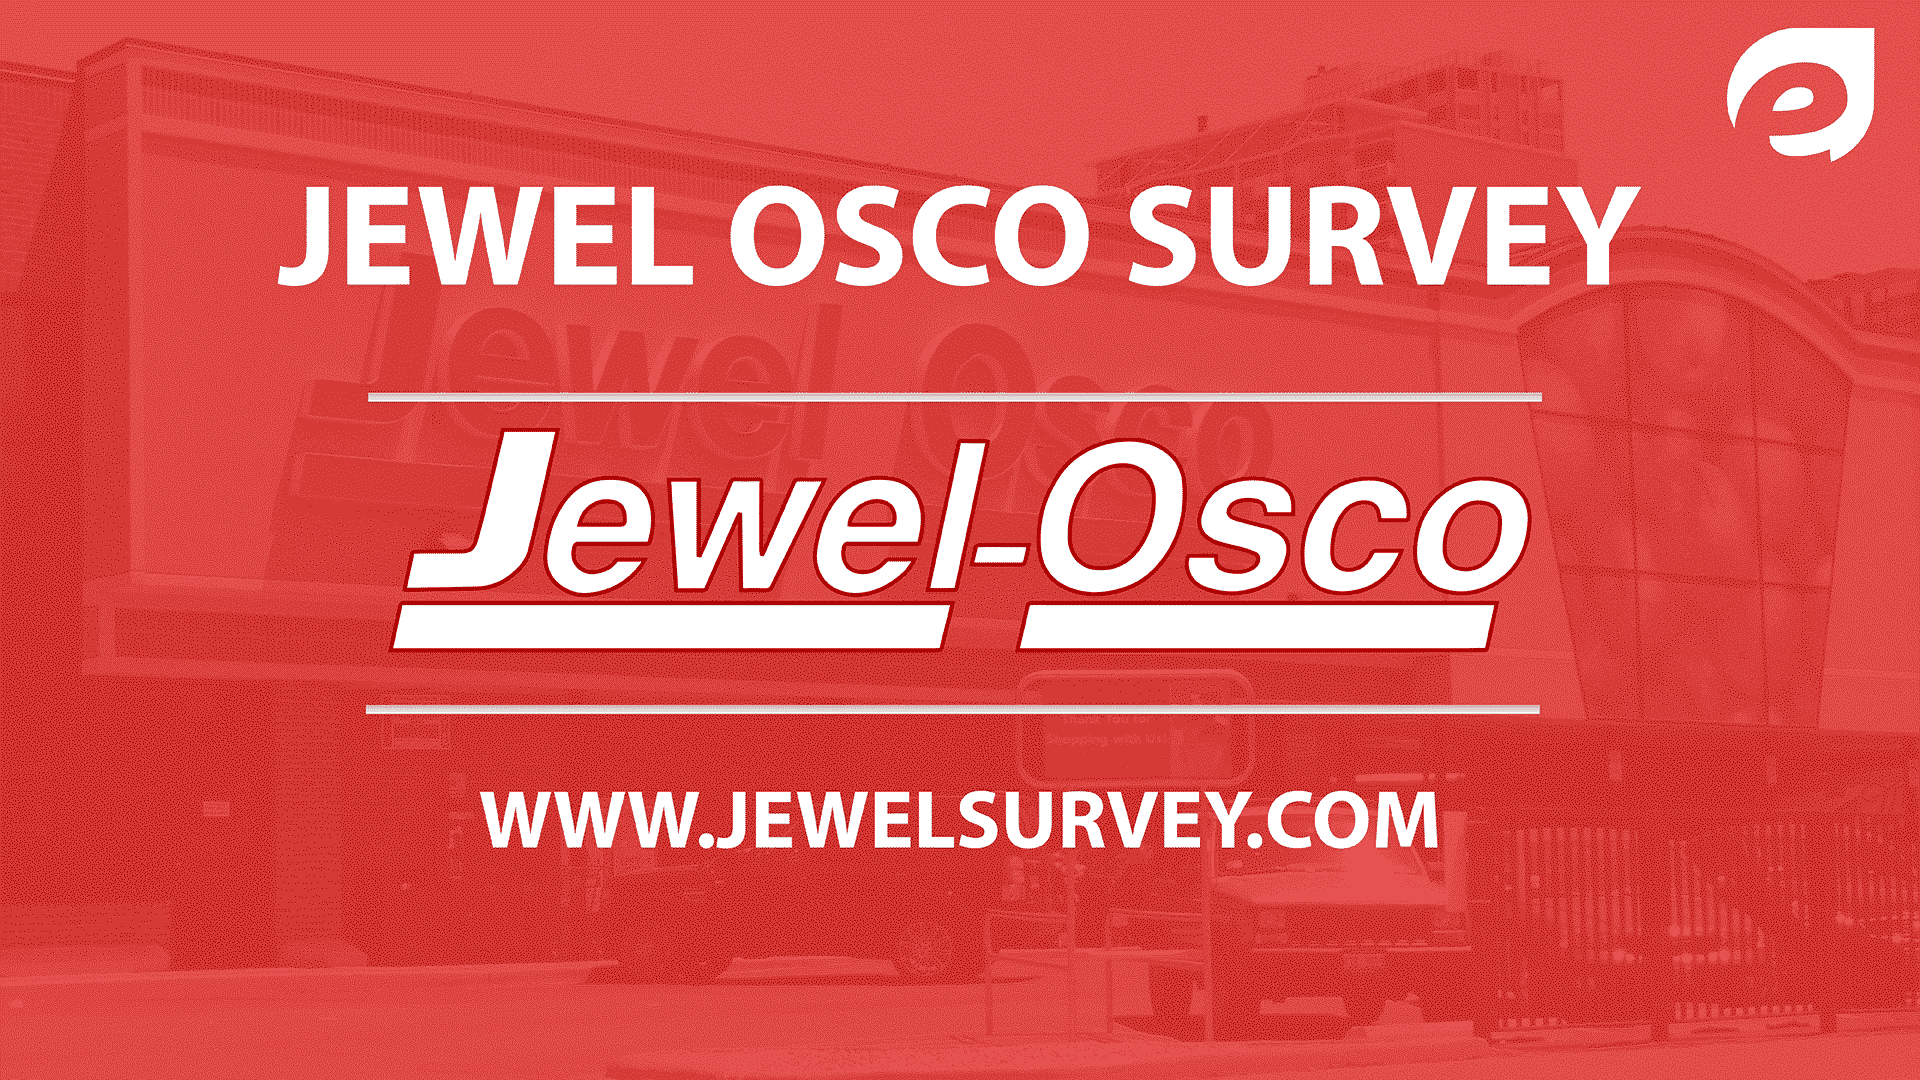 Jewelsurvey.com - Win $100 - Jewel Osco Survey